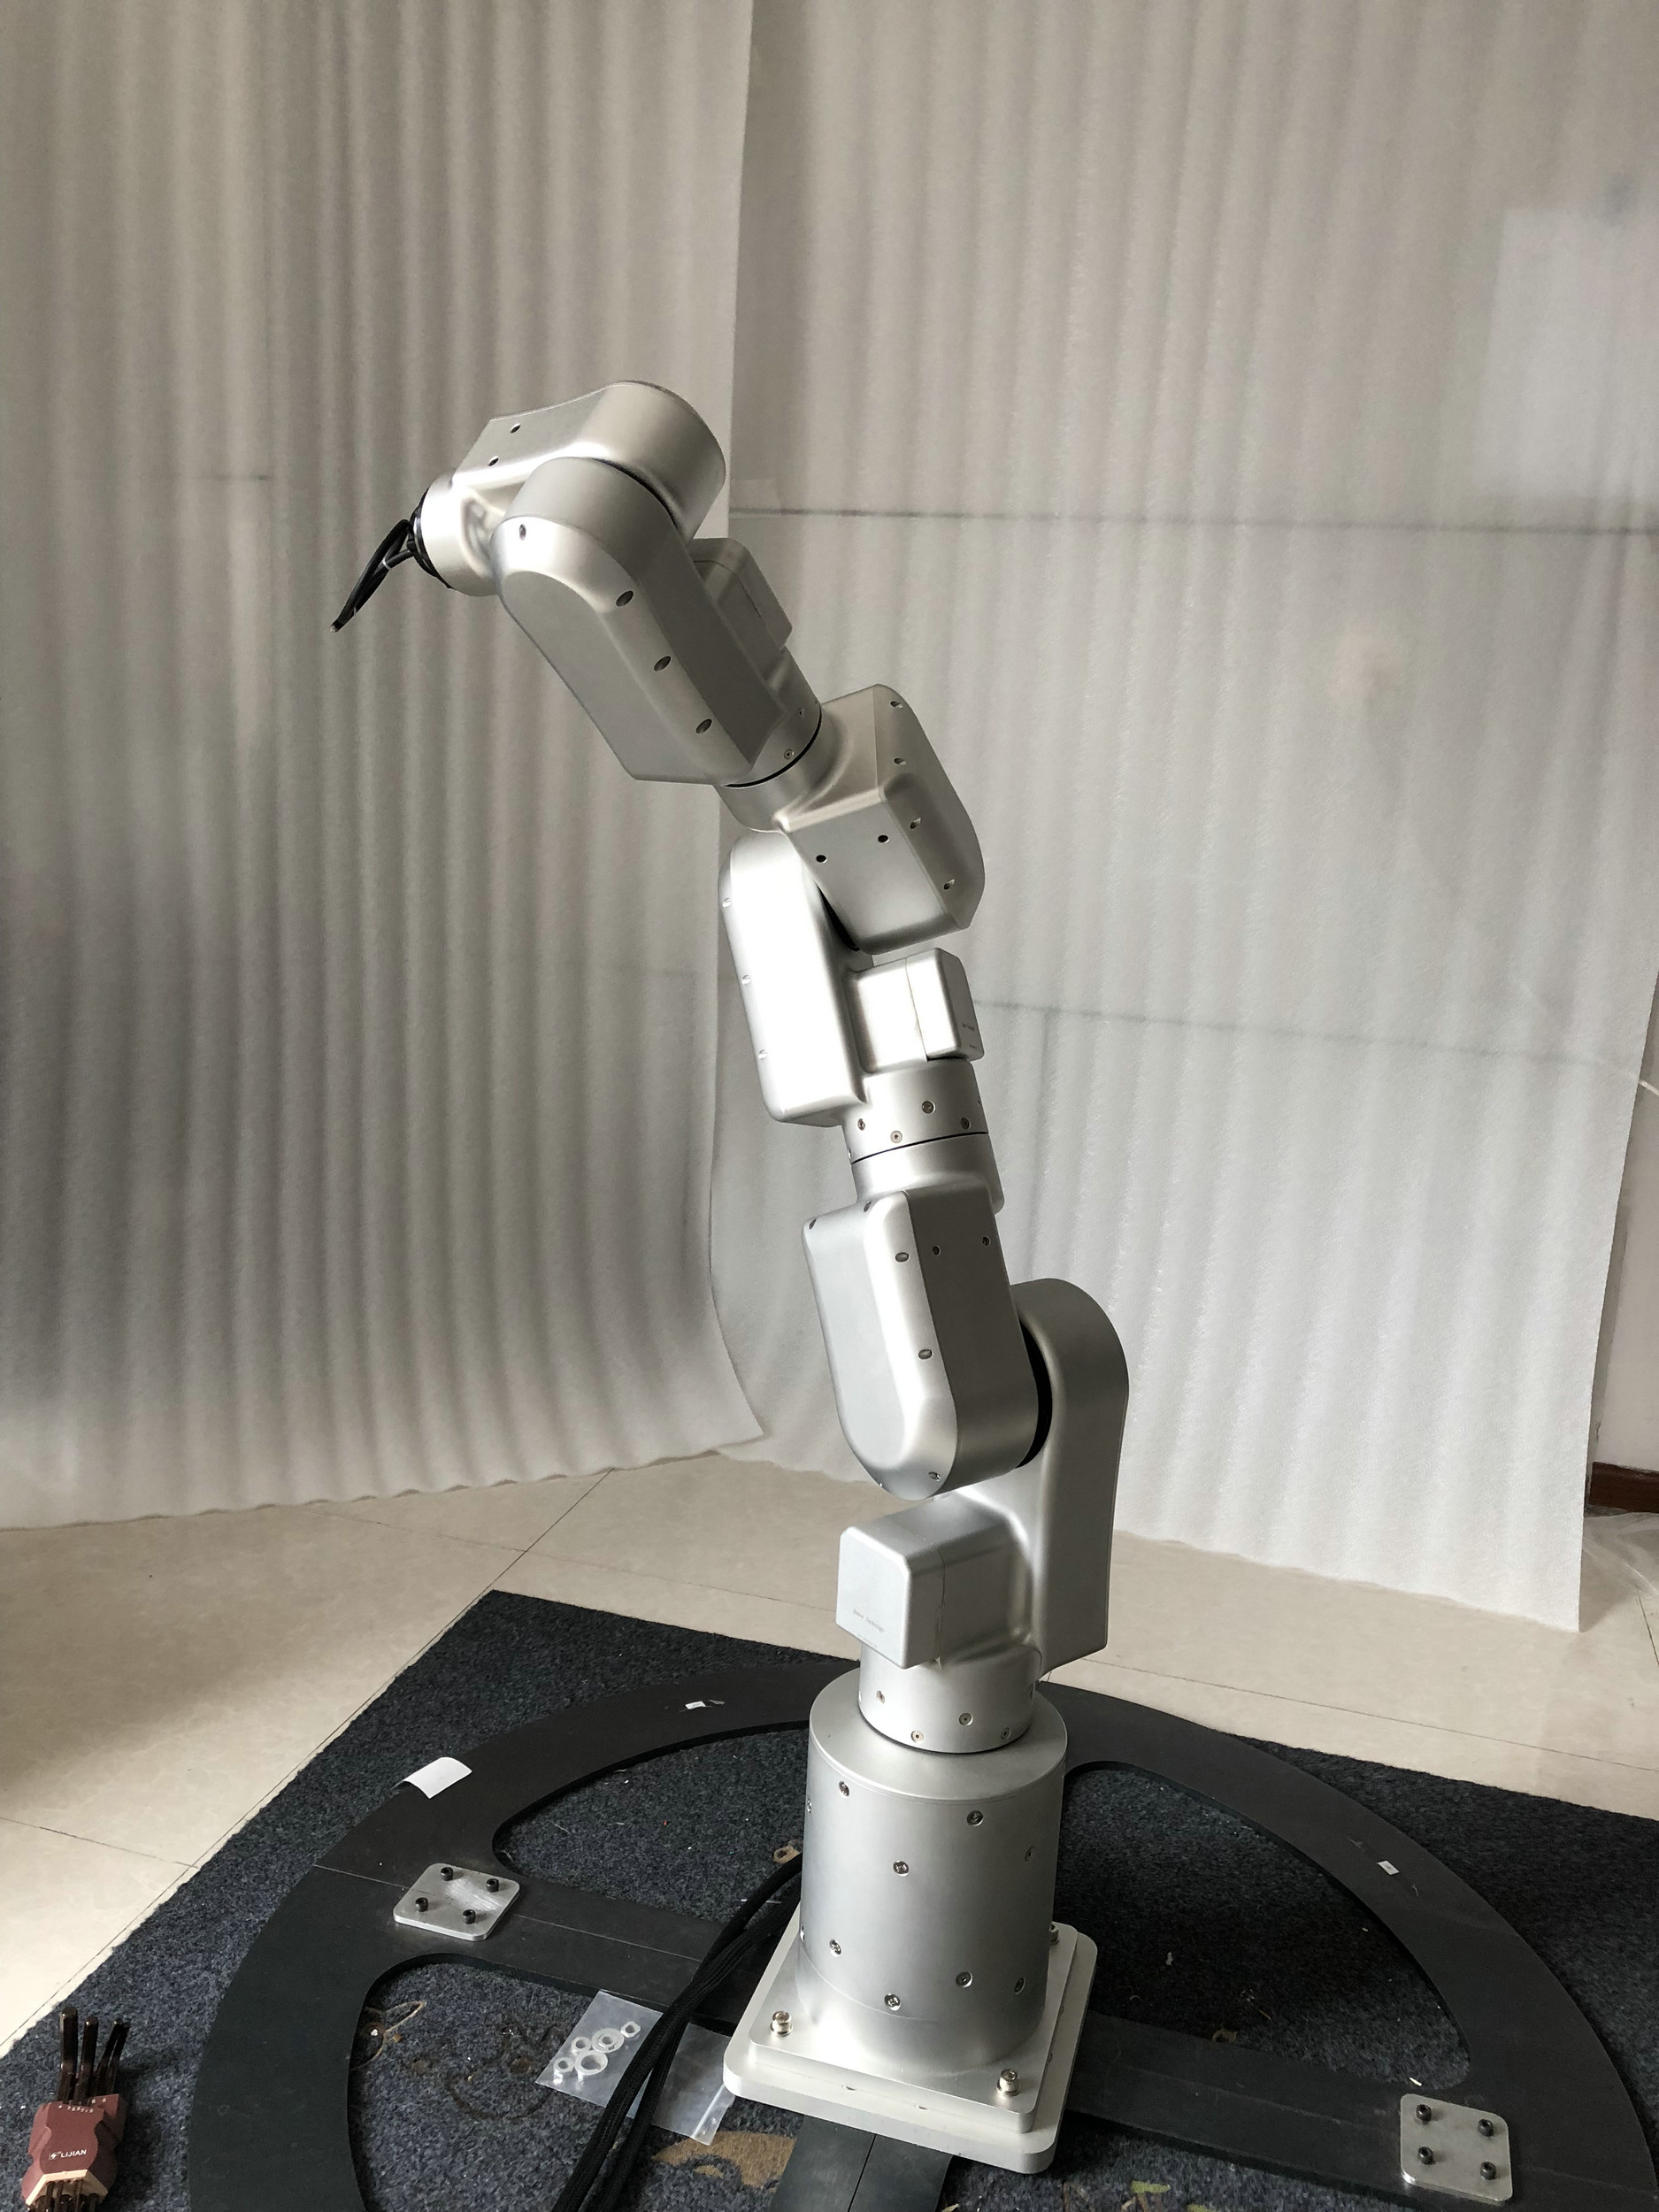 Seven-axis light cooperative robotic arm